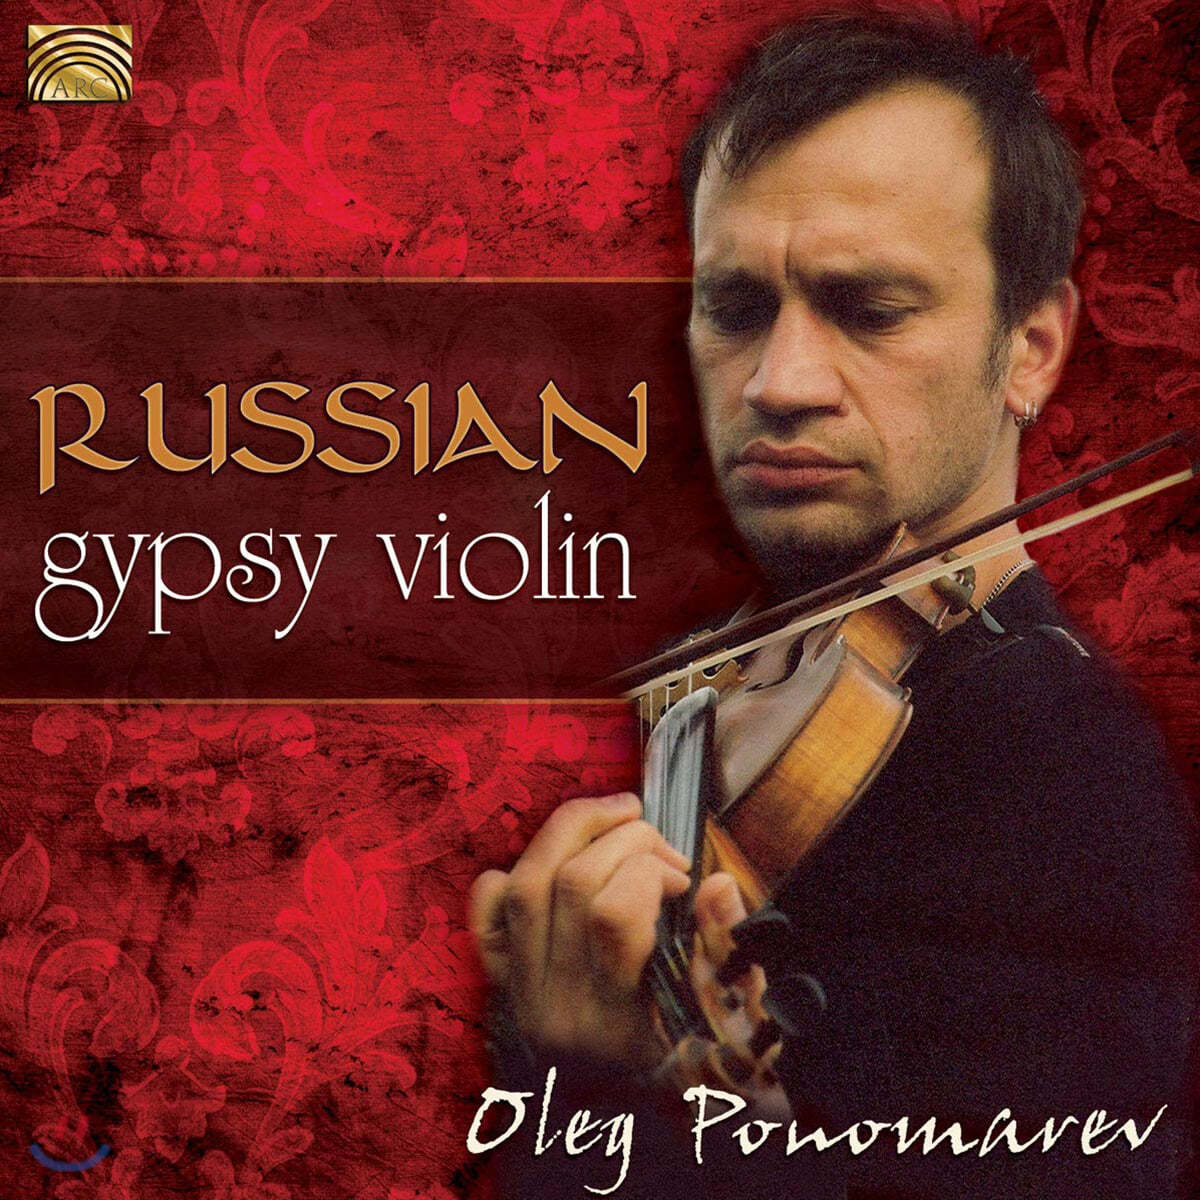 Oleg Ponomarev (올레그 포노마레프) - 러시아 집시 바이올린 Russian Gypsy Violin